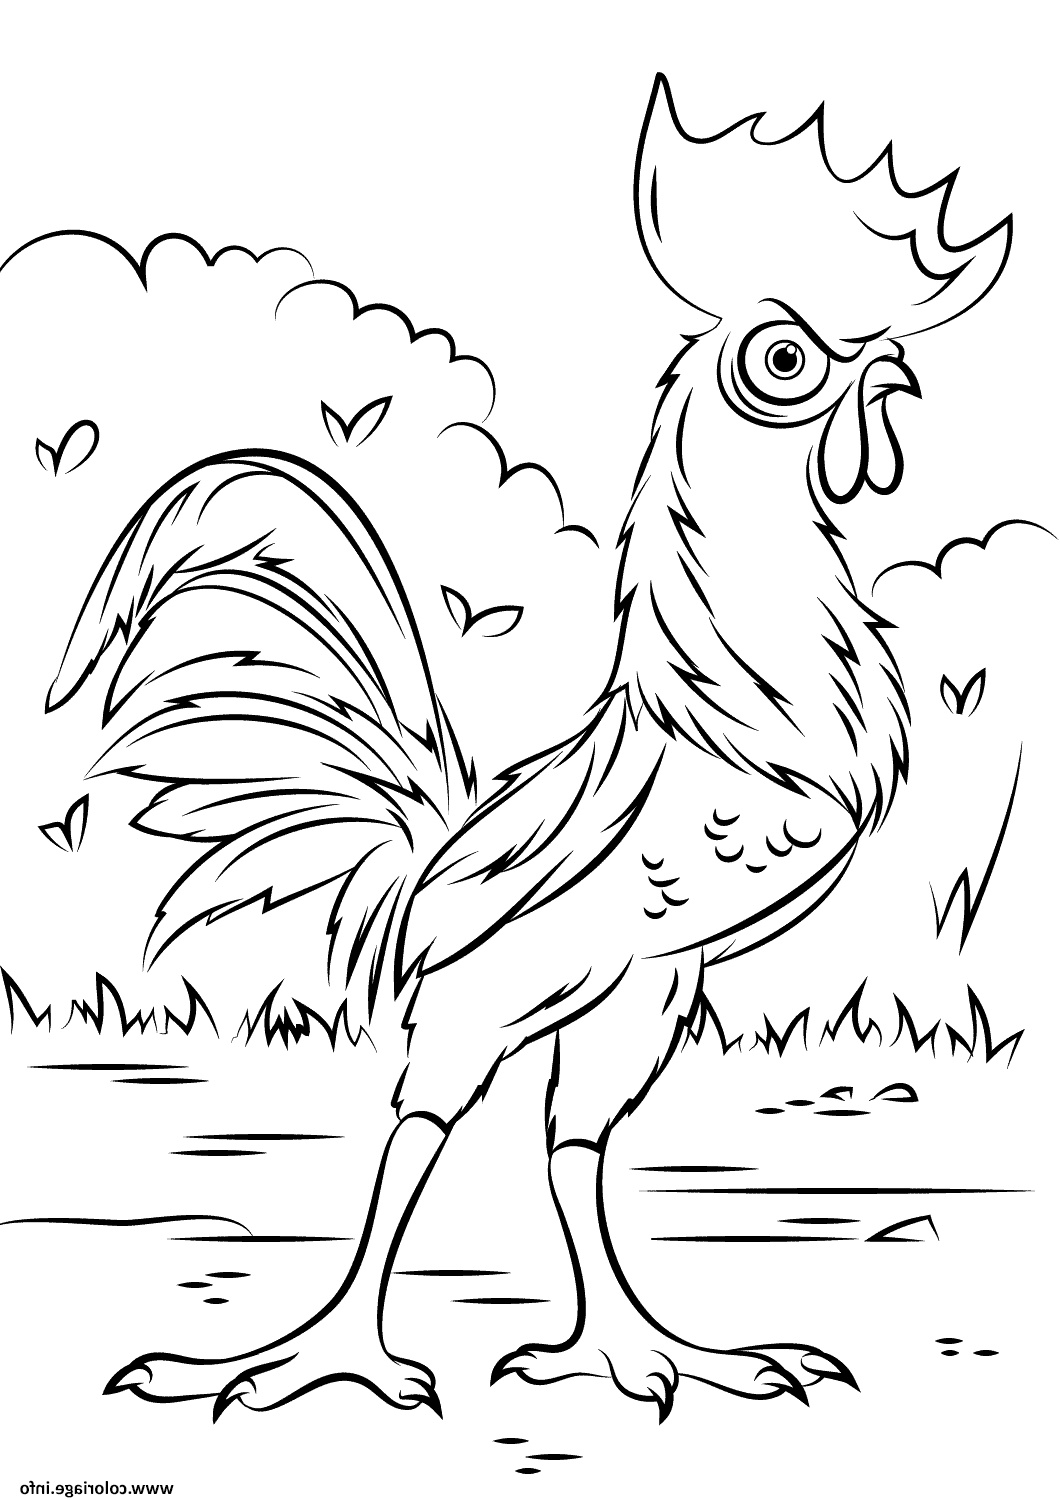 heihei rooster de moana vaiana coloriage dessin